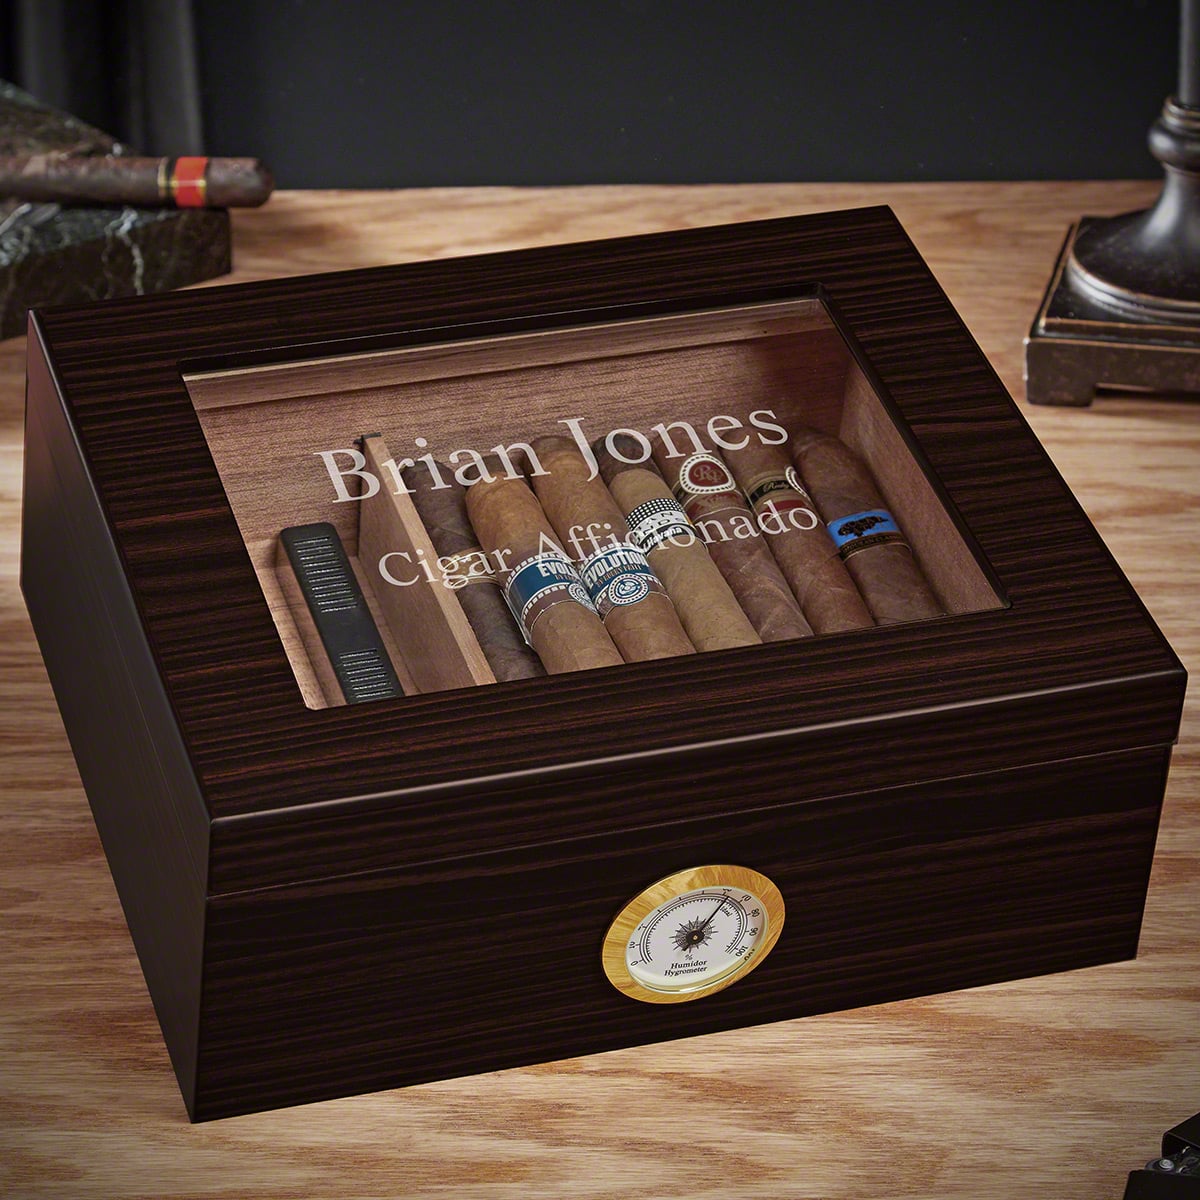 Dante Personalized Humidor Cigar Box with Hygrometer - Espresso Brown Cedar Lined